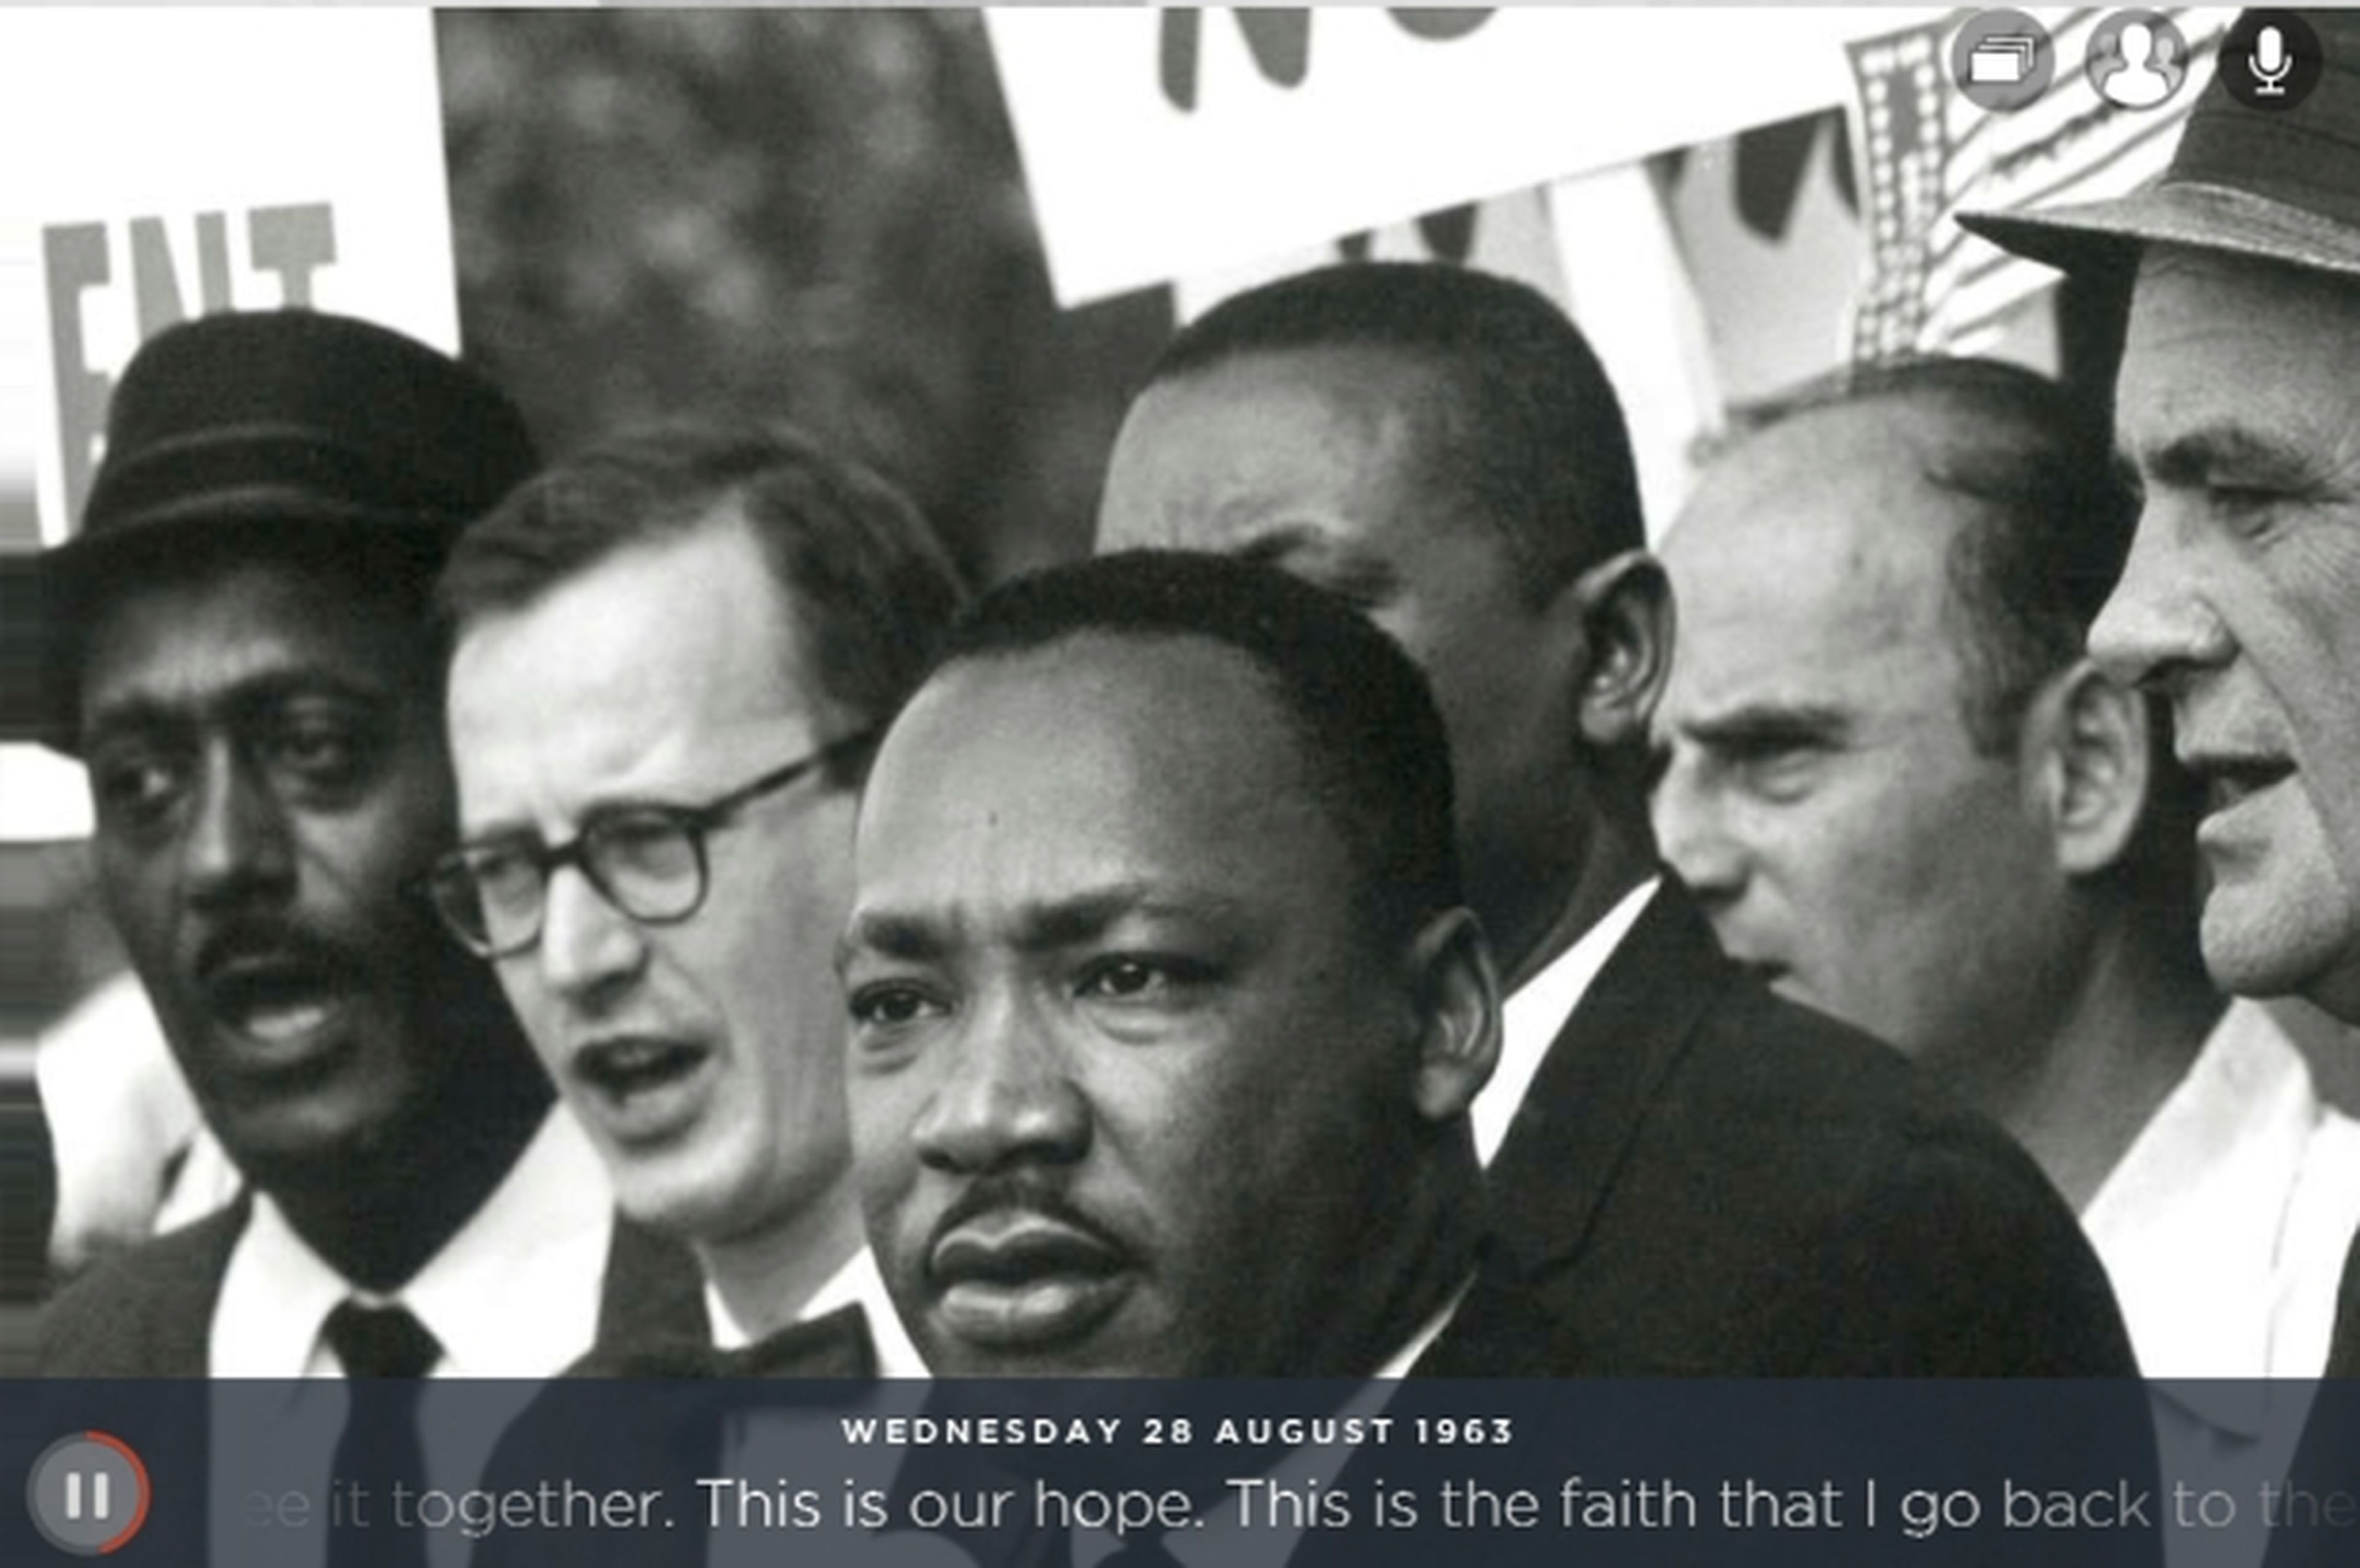 El mítico discurso de Martin Luther King "I have a dream", según Google